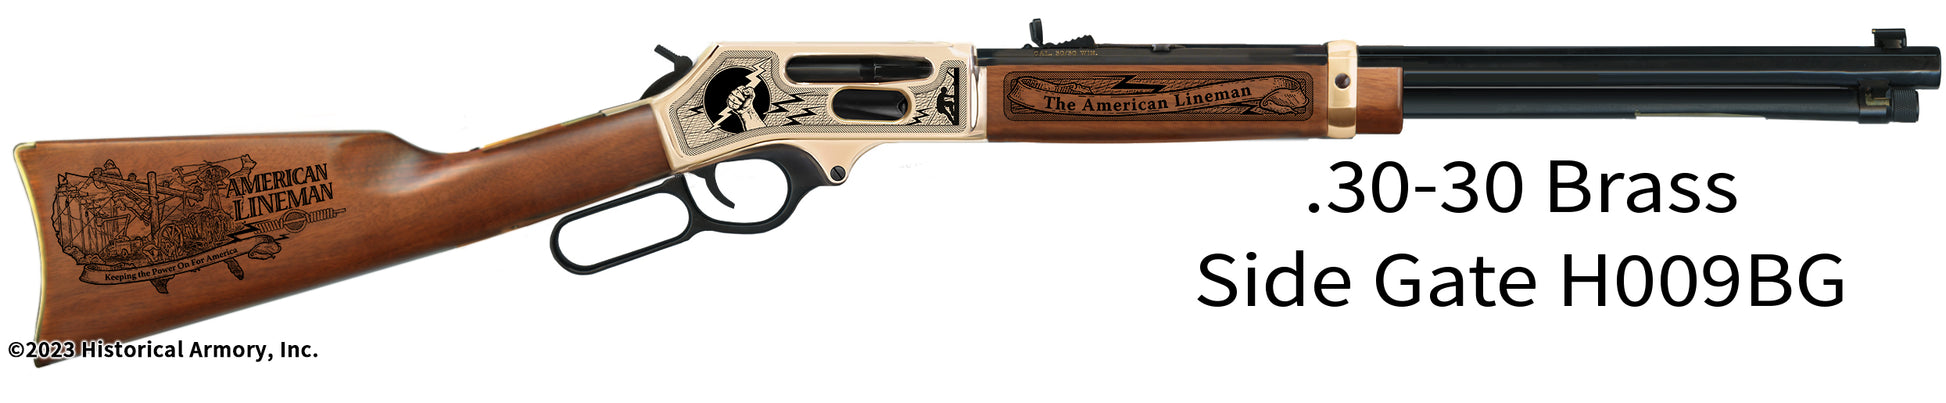 American Lineman Henry .30-30 Brass Side Gate Engraved Rifle